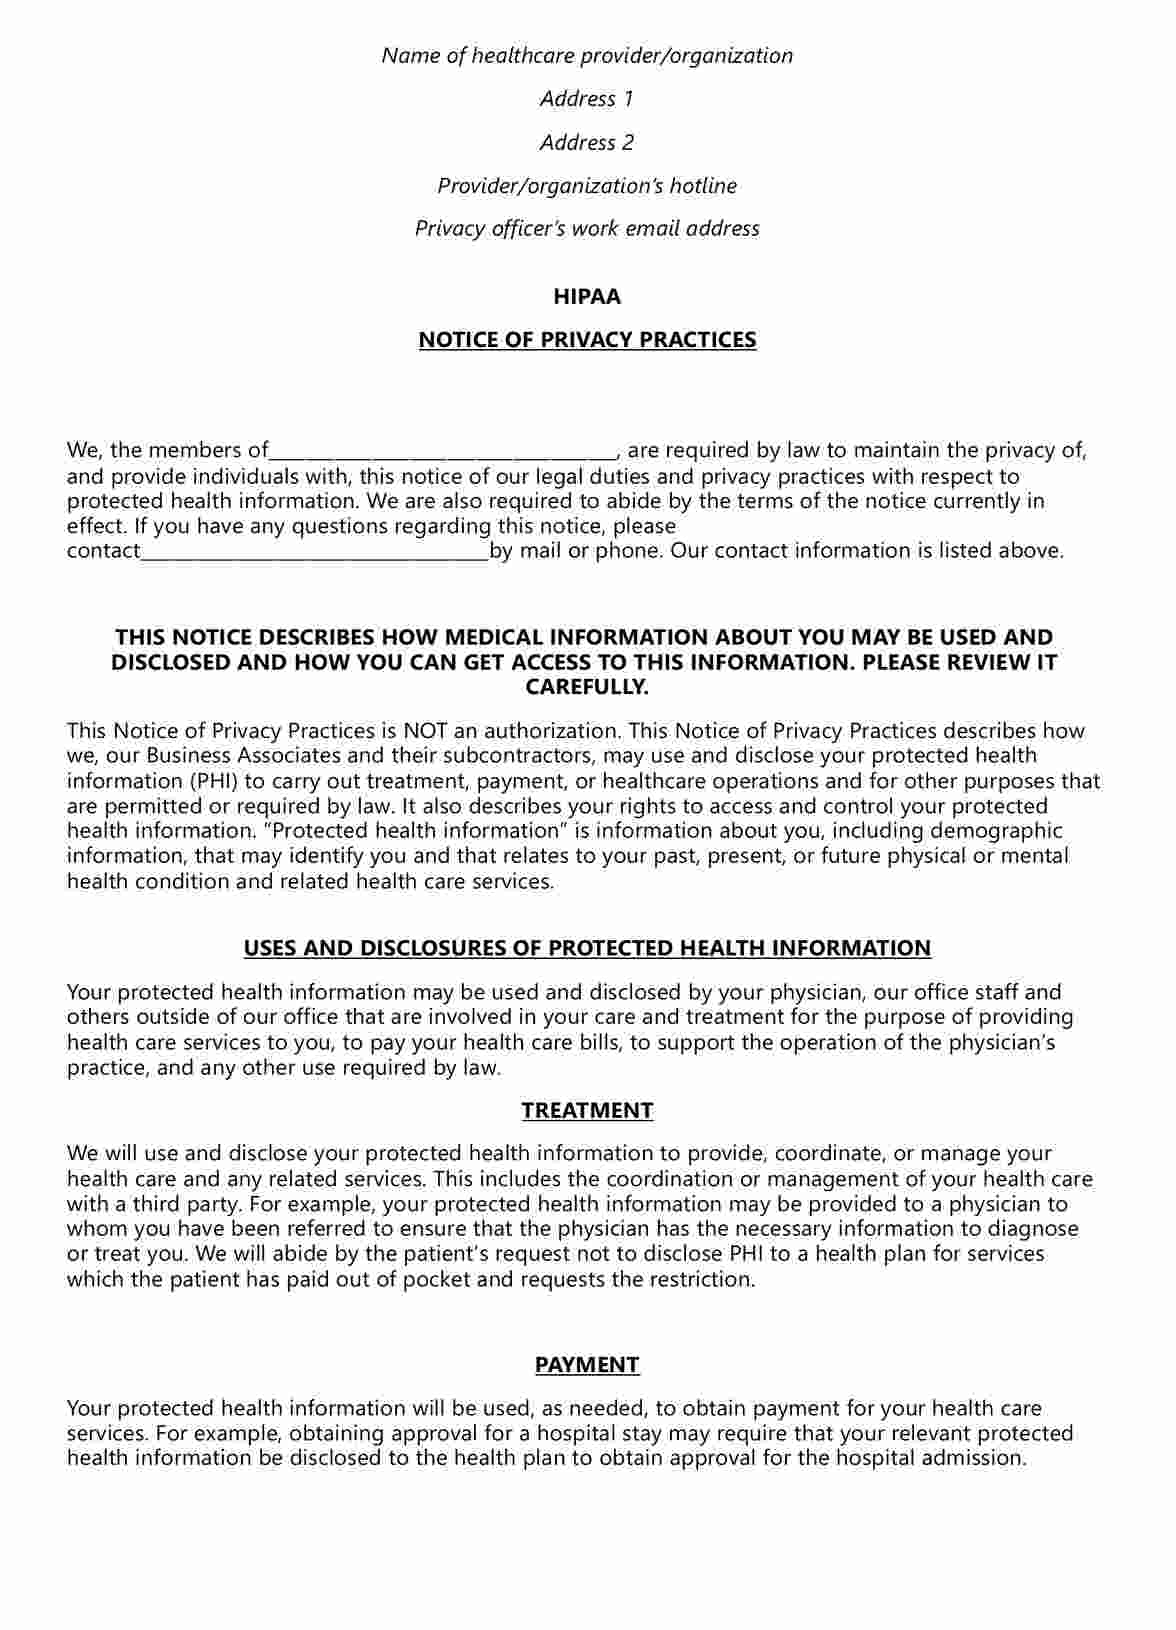 Notice of Privacy Practices (NOPP) PDF Example